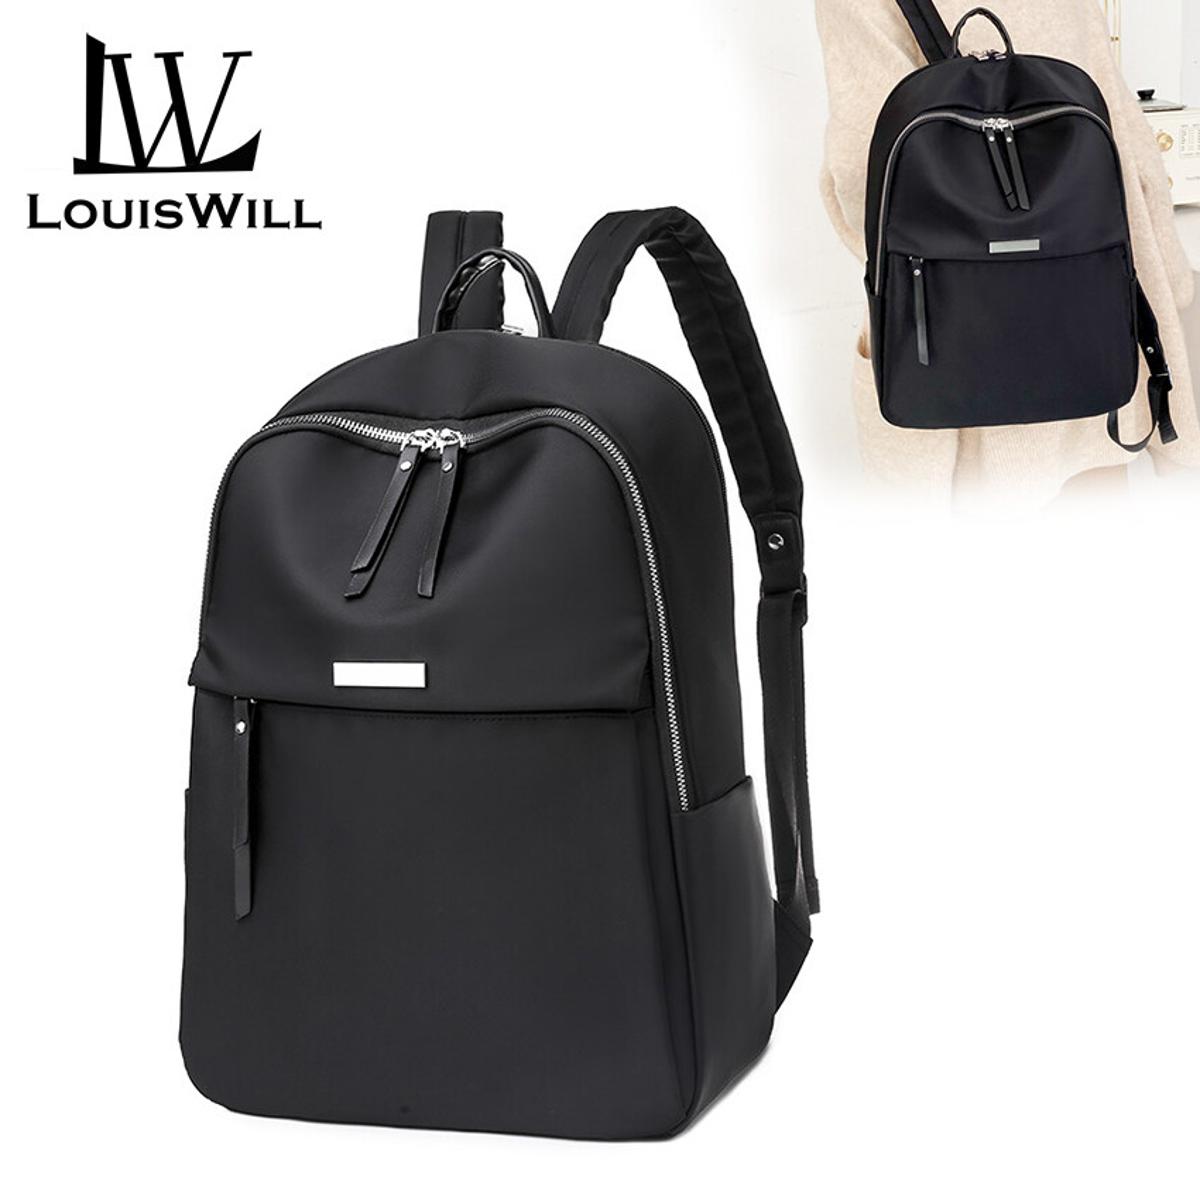 LouisWill backpack for women Women Backpacks Shoulder Bags Korean